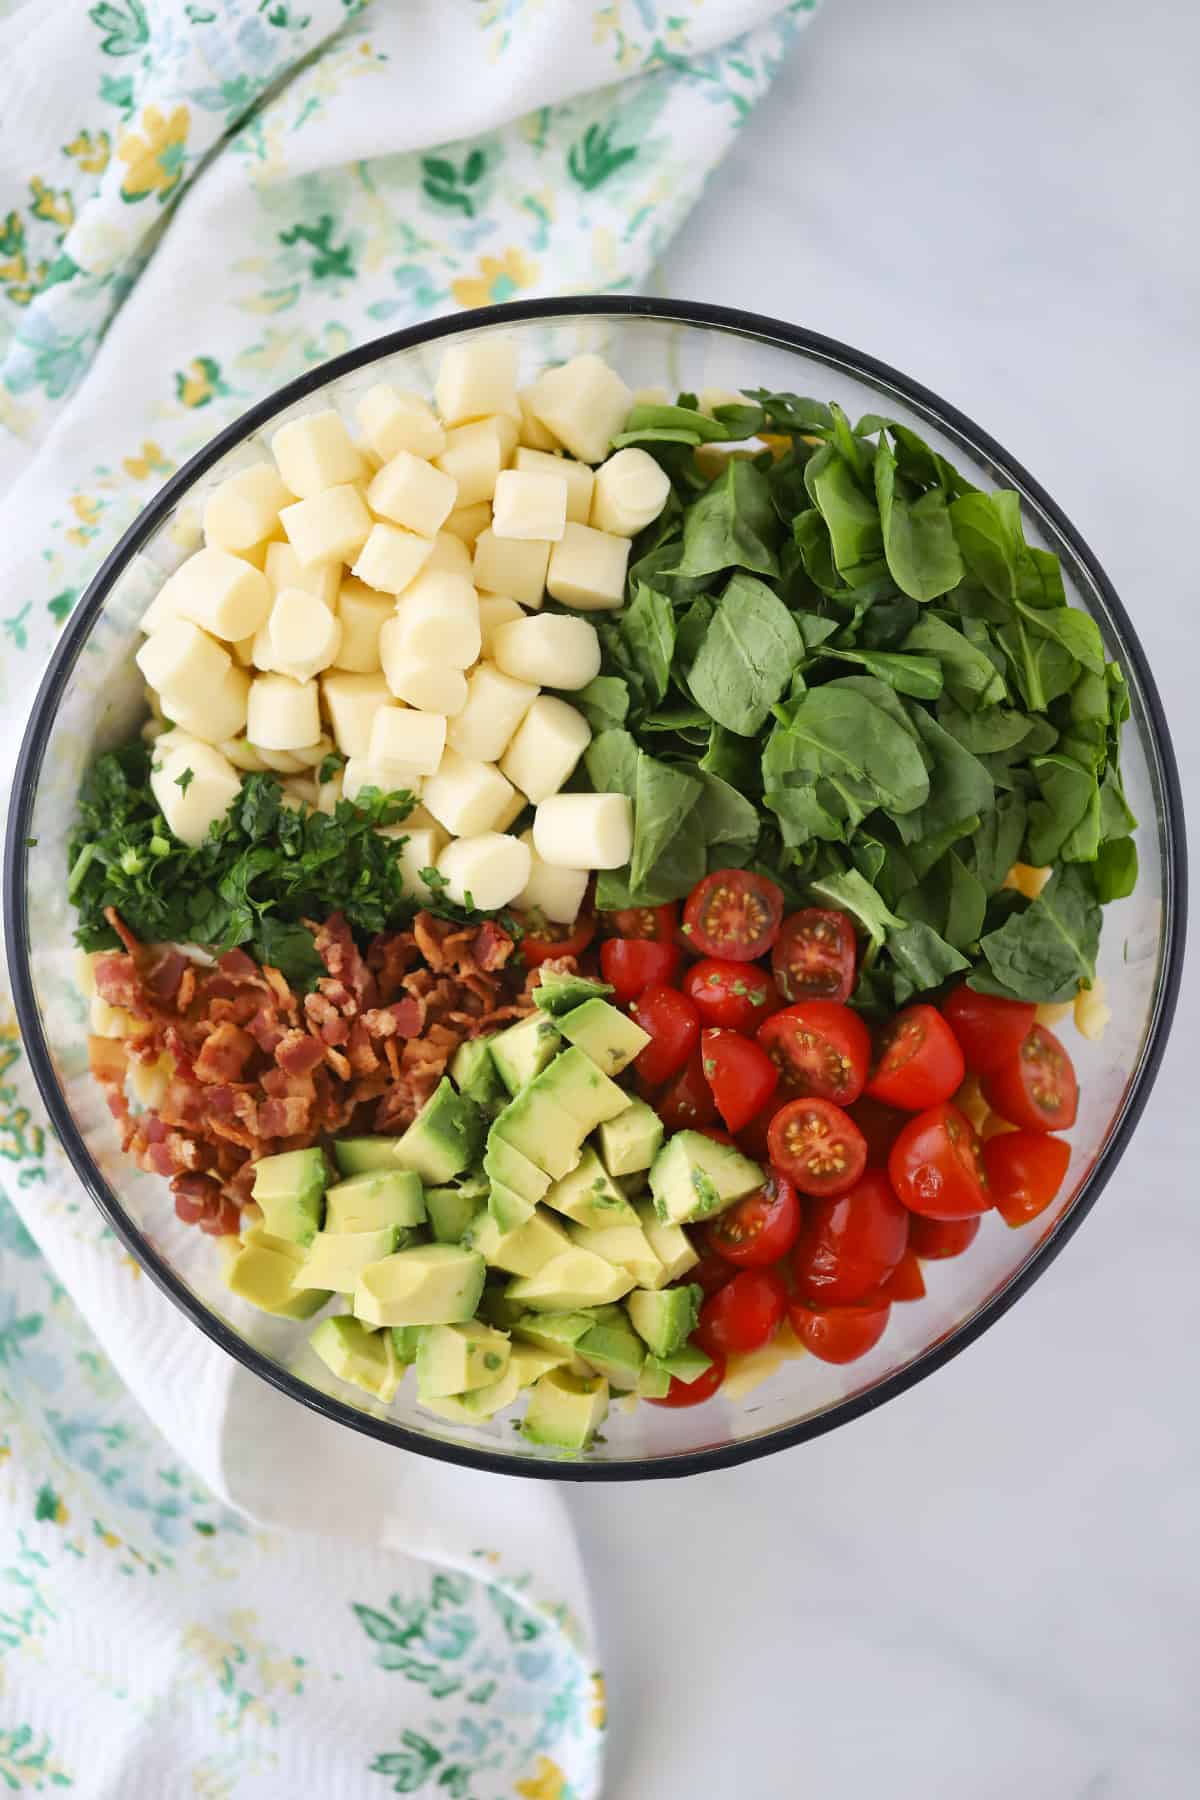 Ingredients to make this BLT Pasta Salad Recipe in a large bowl.